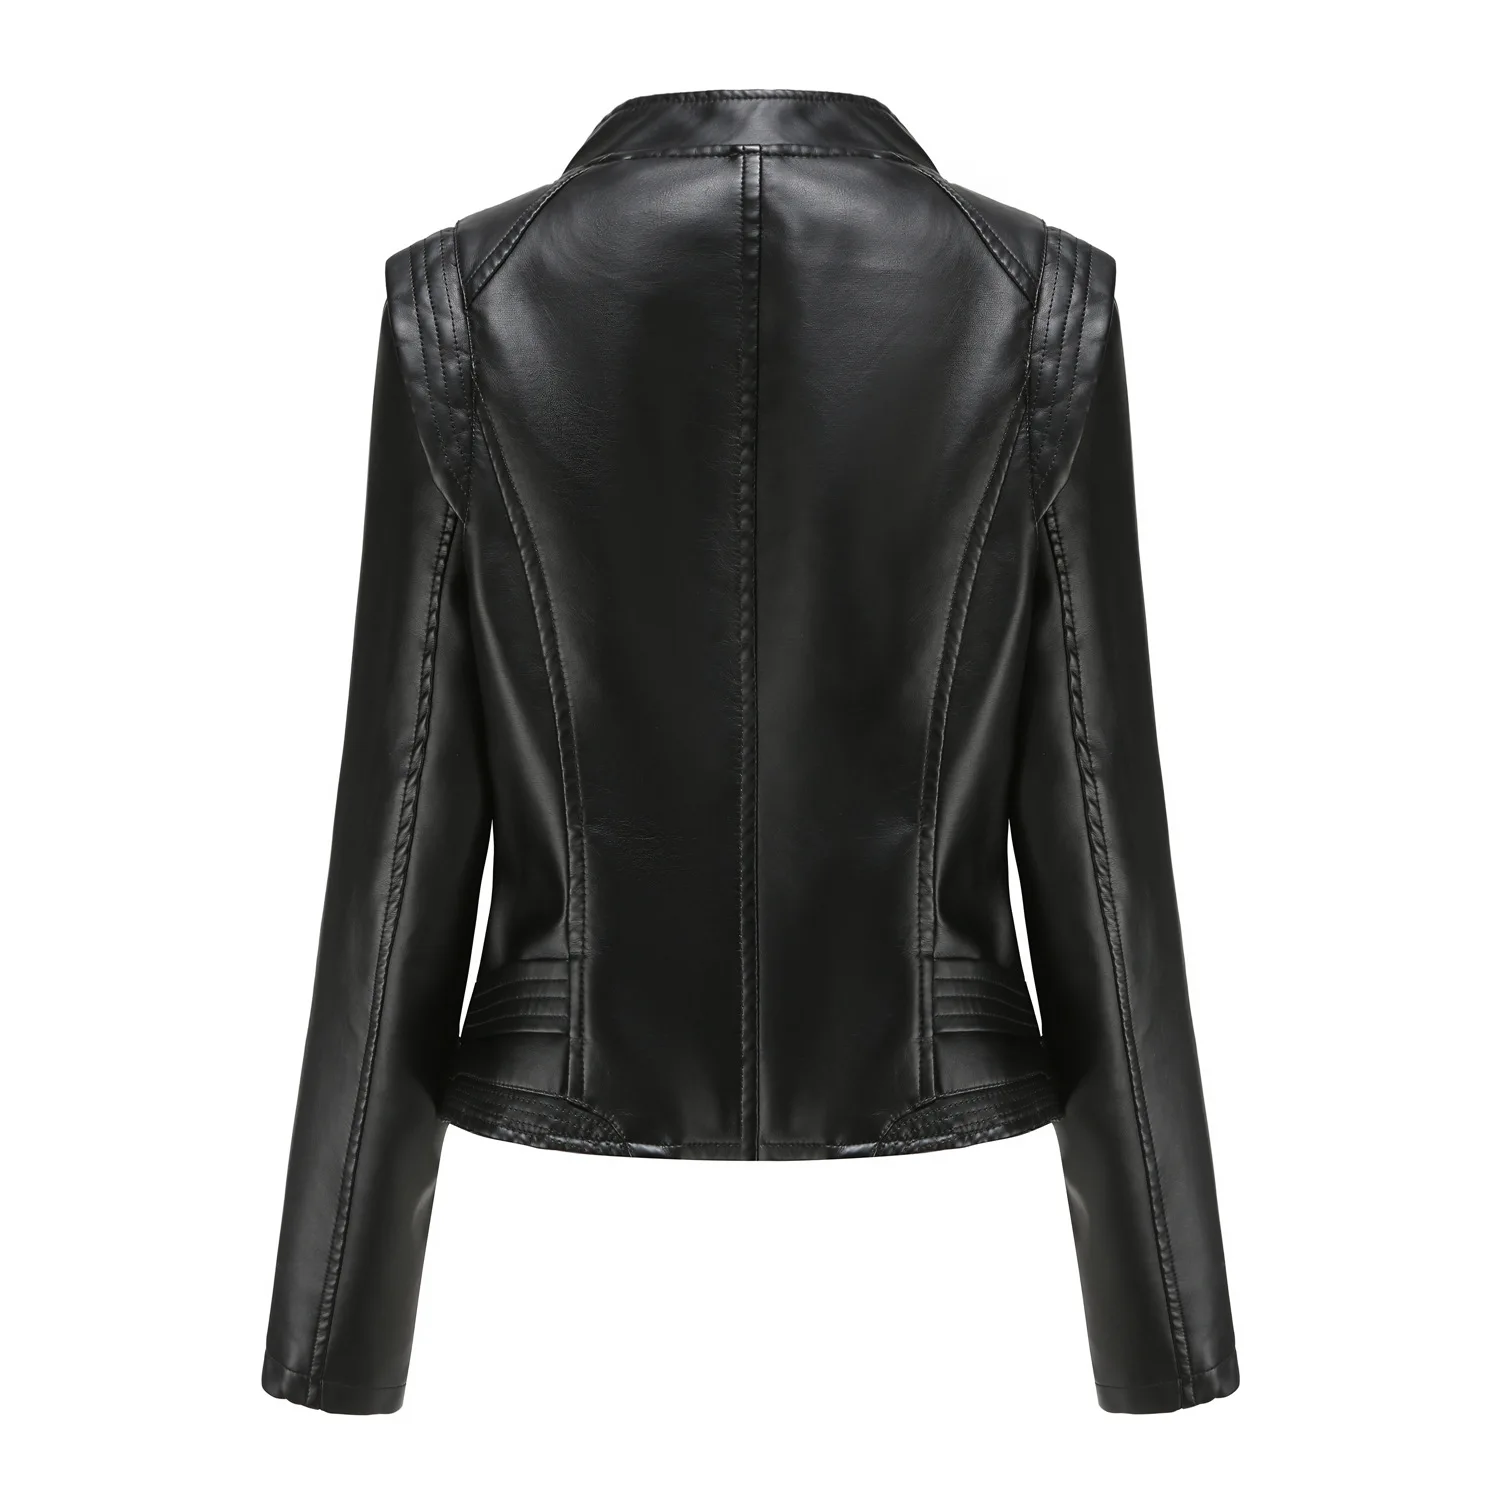 2022 New Spring Autumn PU Leather Jacket Women Slim Fit Short Coat Solid Long Sleeve Ladies Outwear enlarge